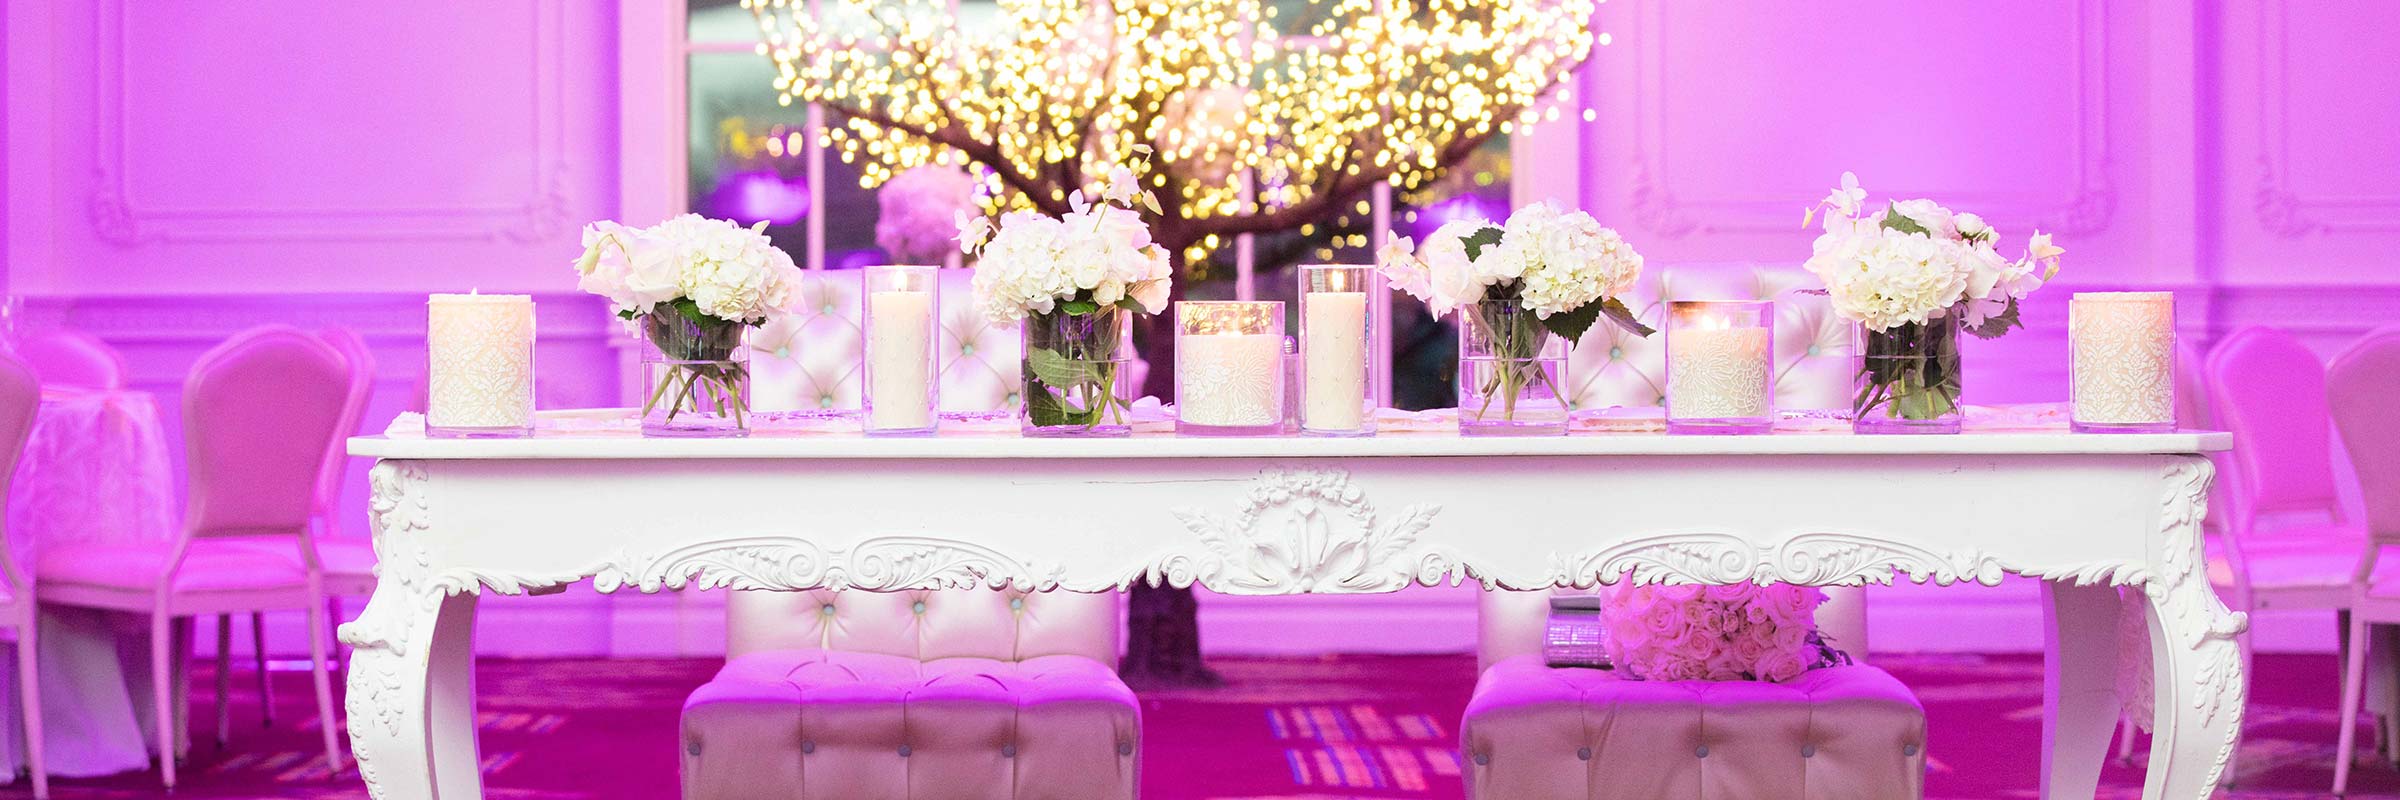 Fresh Flowers Wedding Reception Sweetheart Table